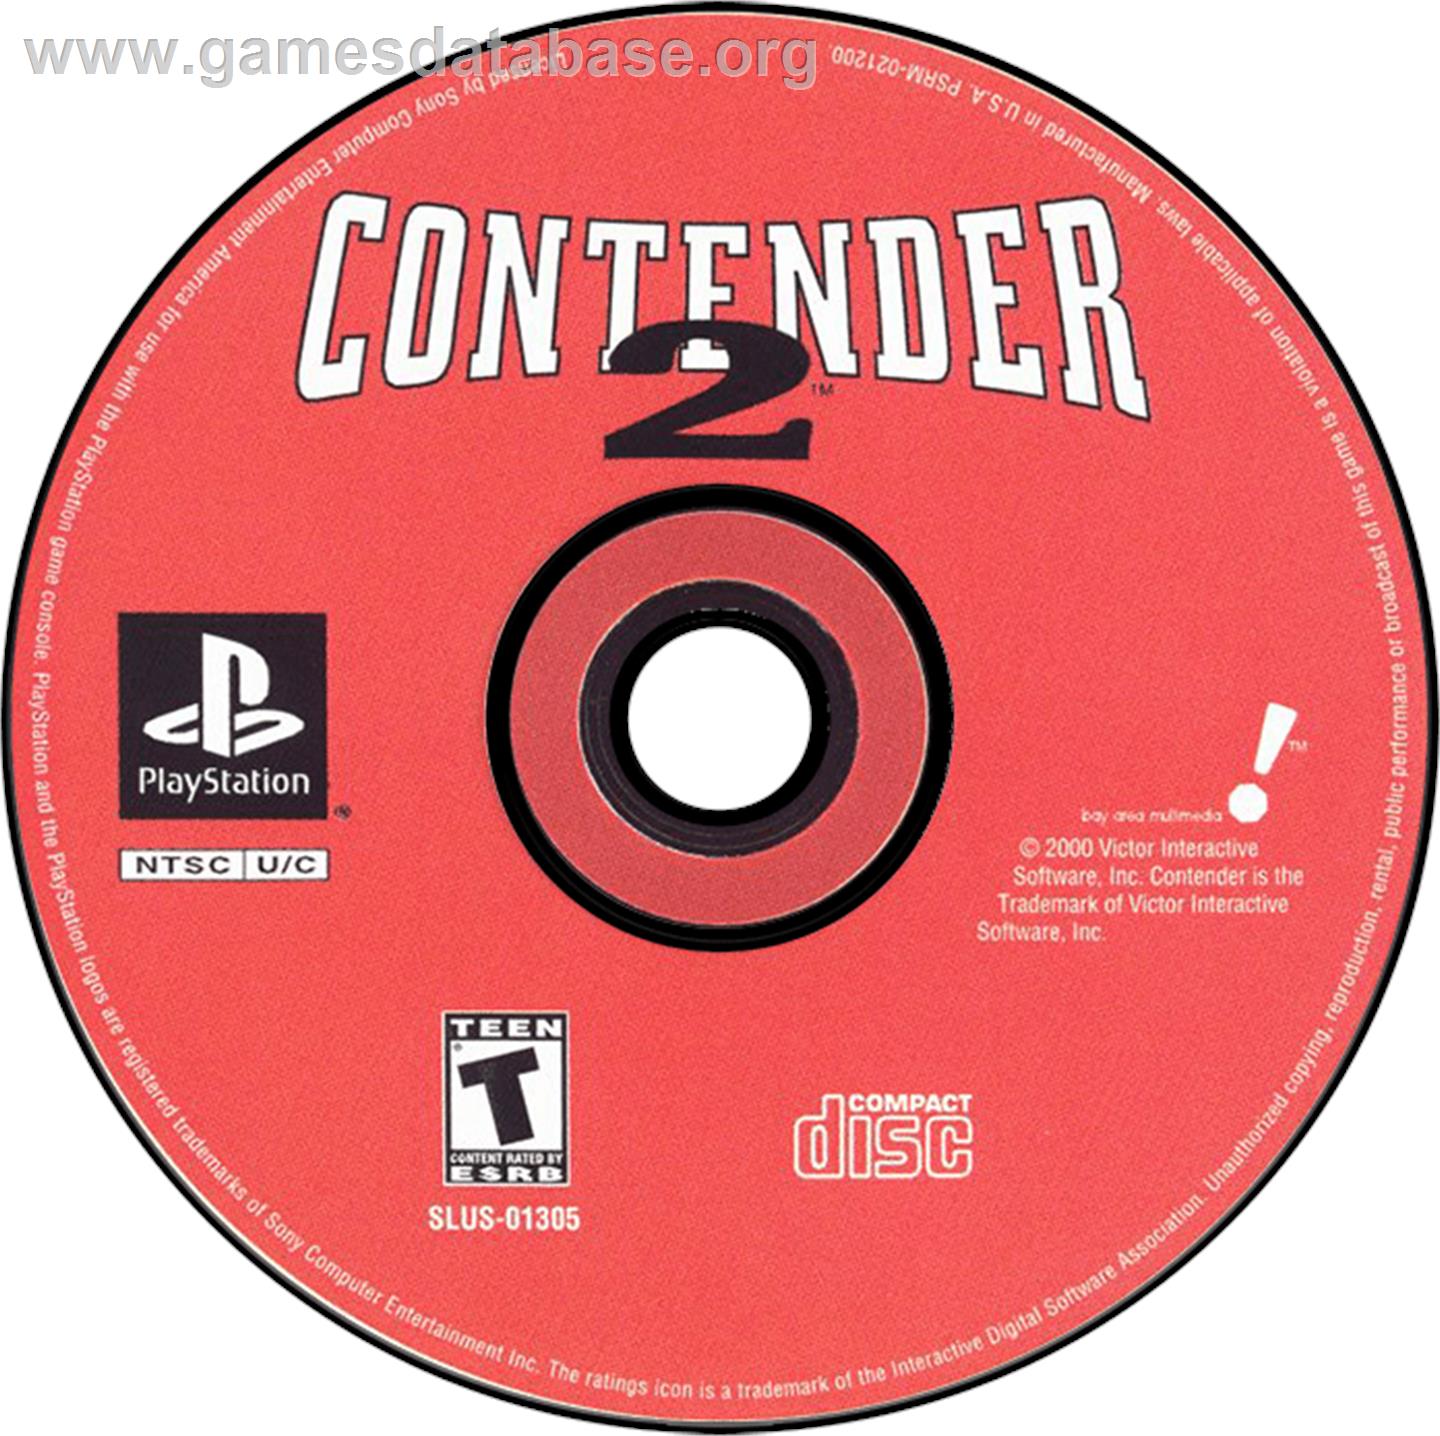 Contender 2 - Sony Playstation - Artwork - Disc